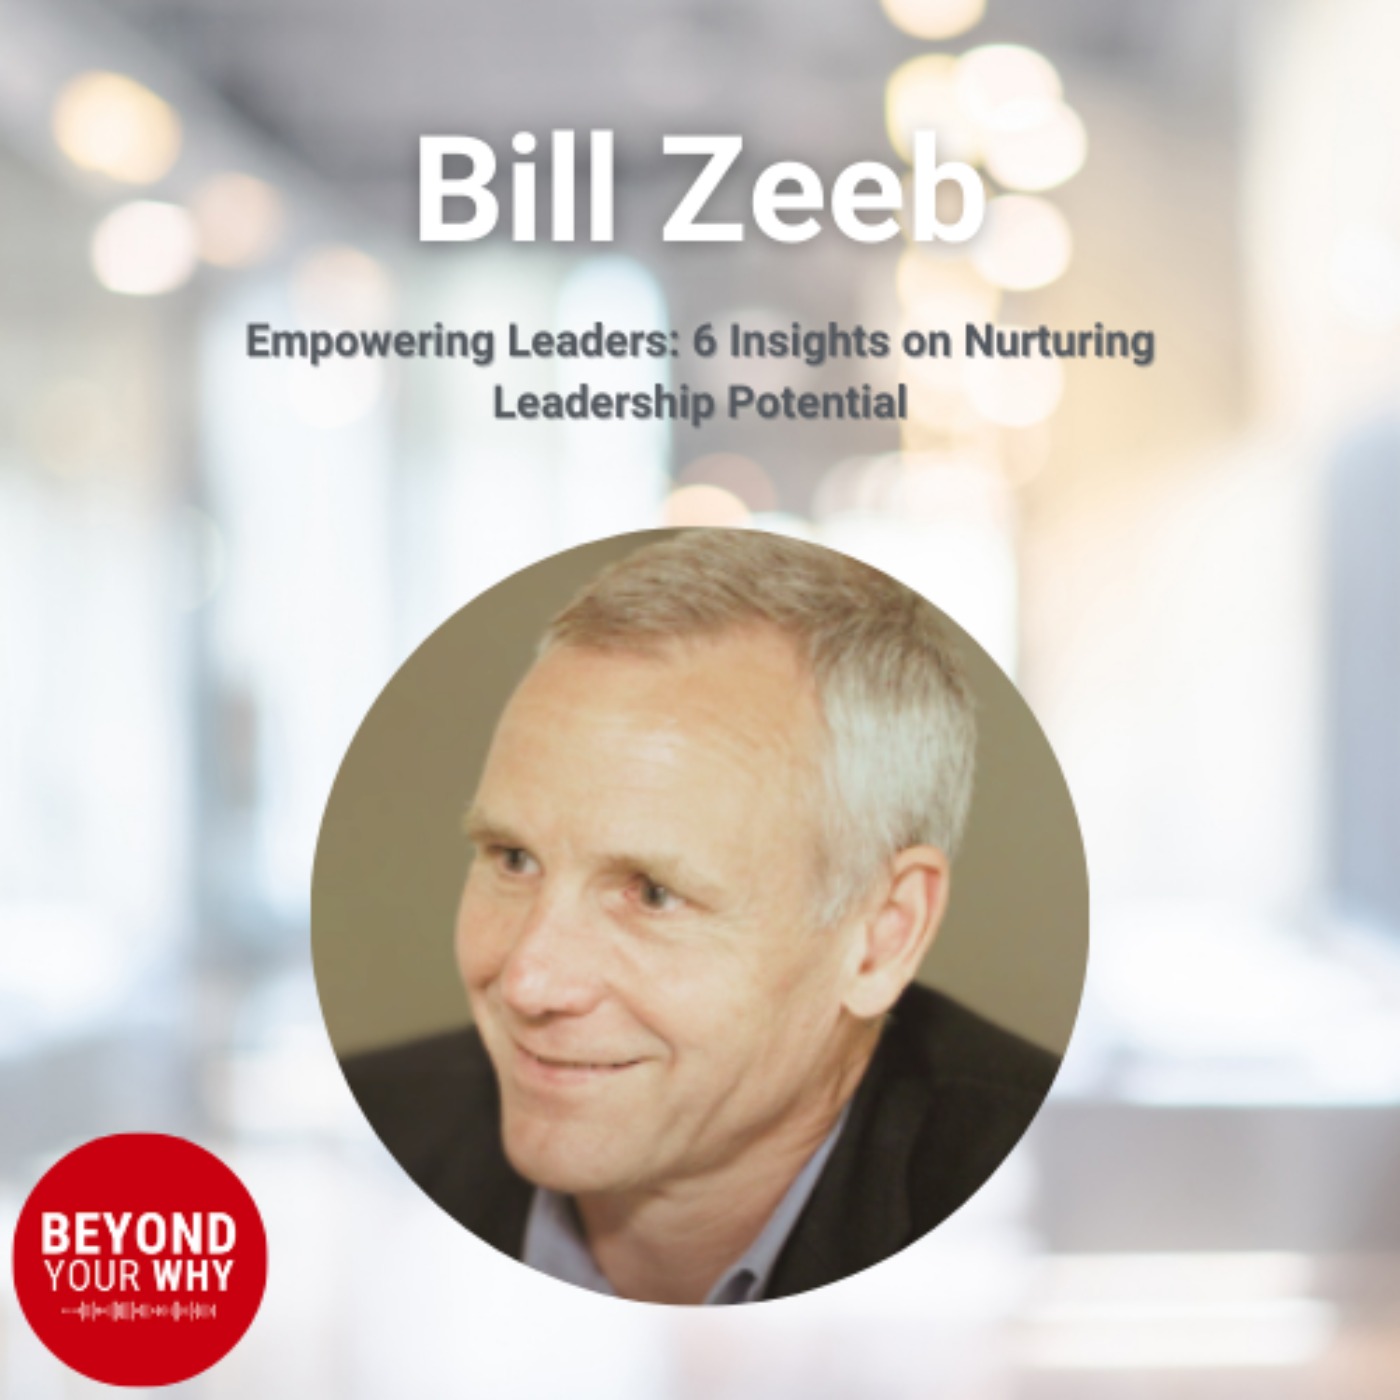 Empowering Leaders: 6 Insights from Bill Zeeb on Nurturing Leadership Potential